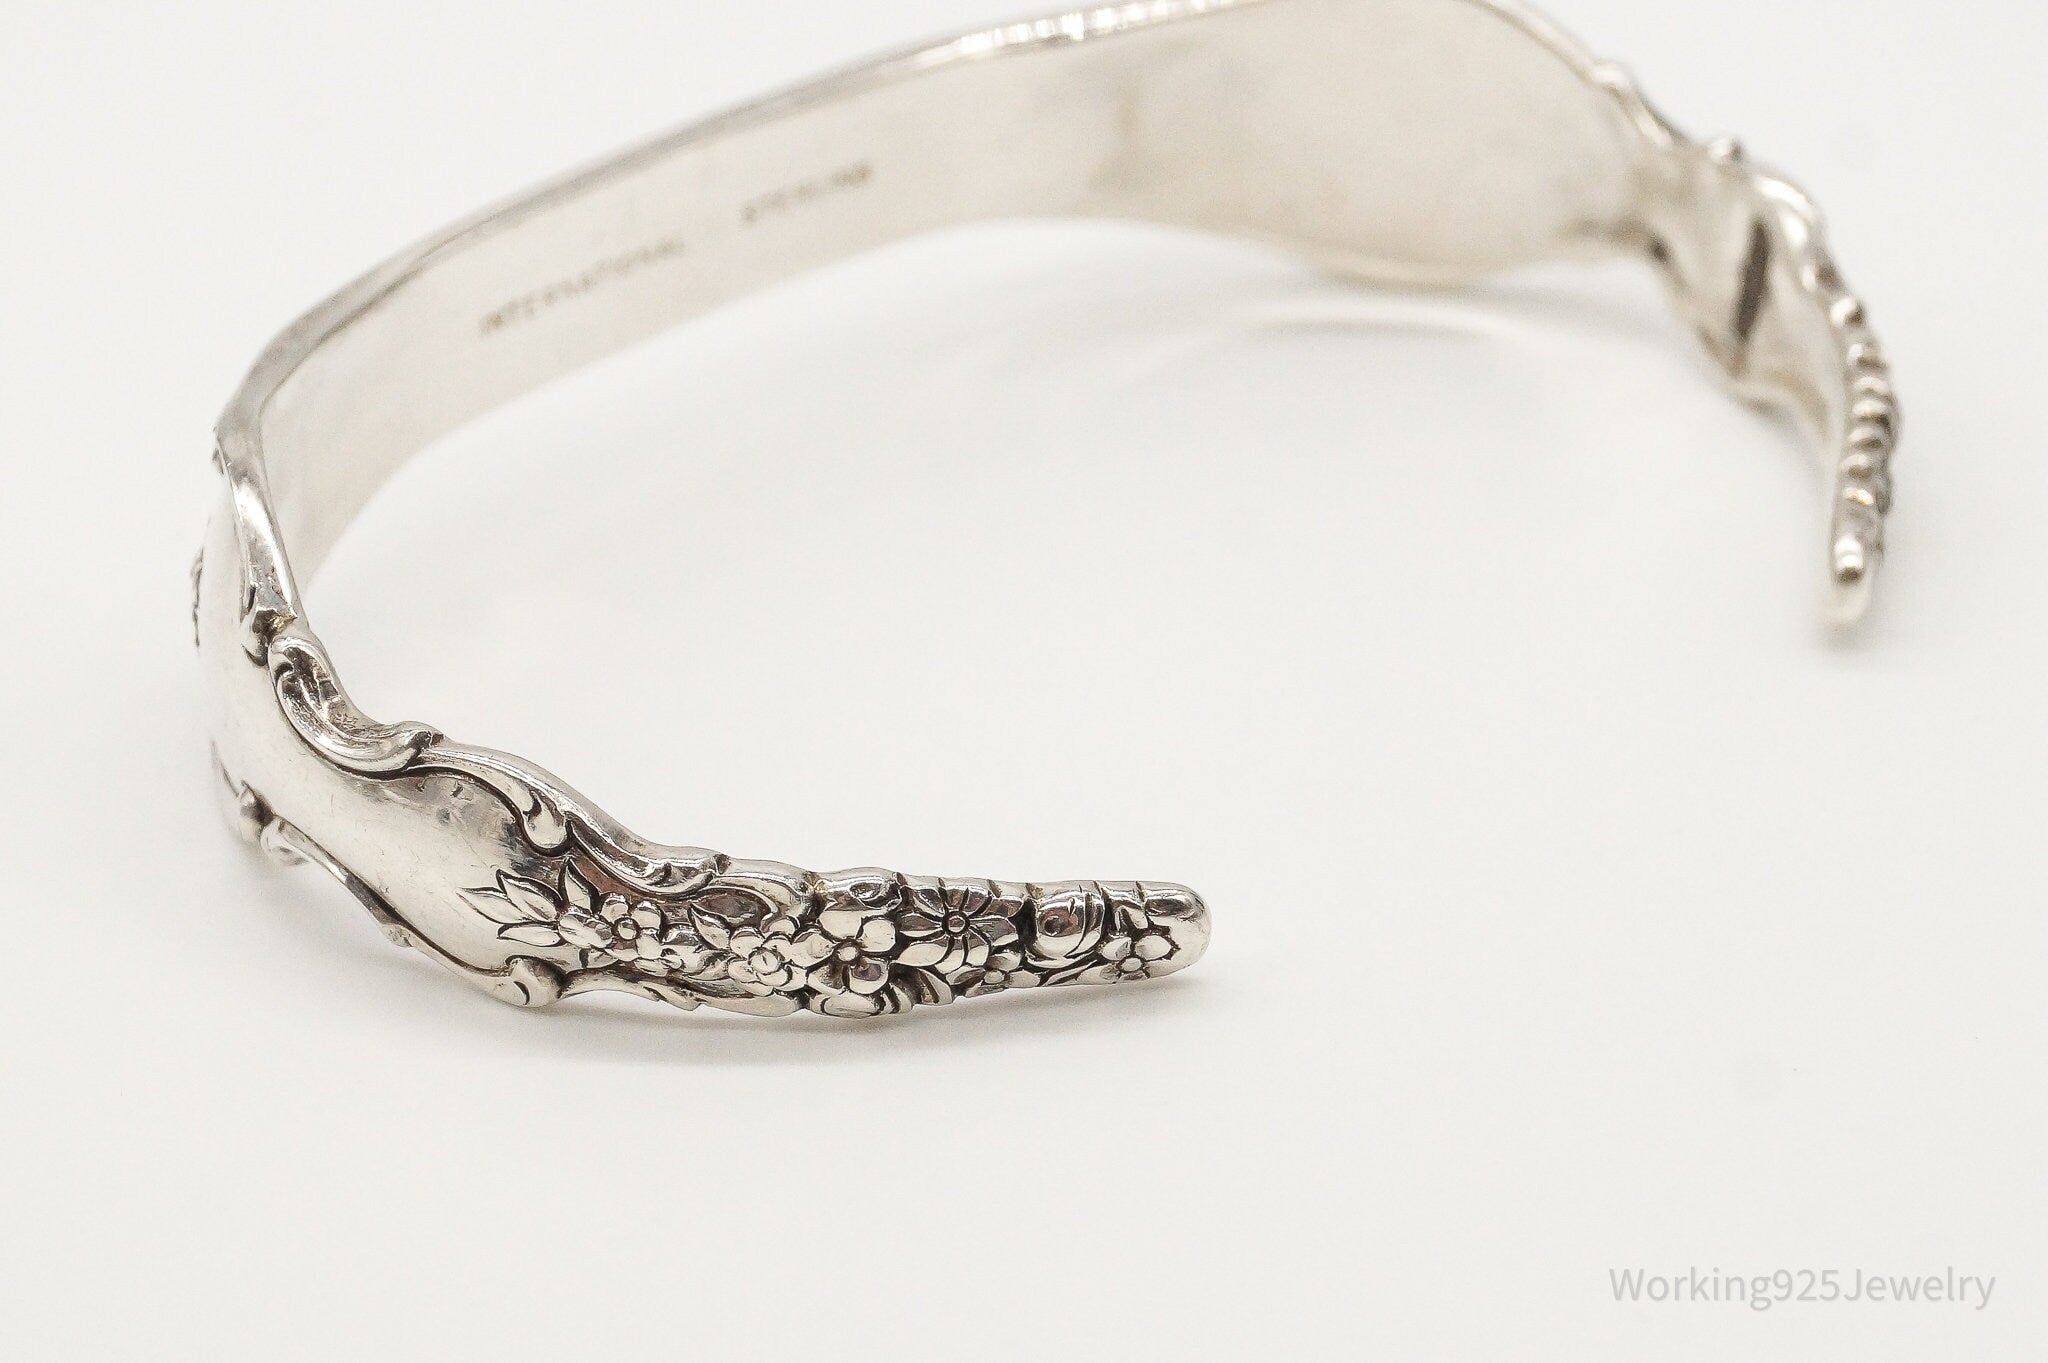 Antique Initials Name Plate International Sterling Silver Cuff Bracelet